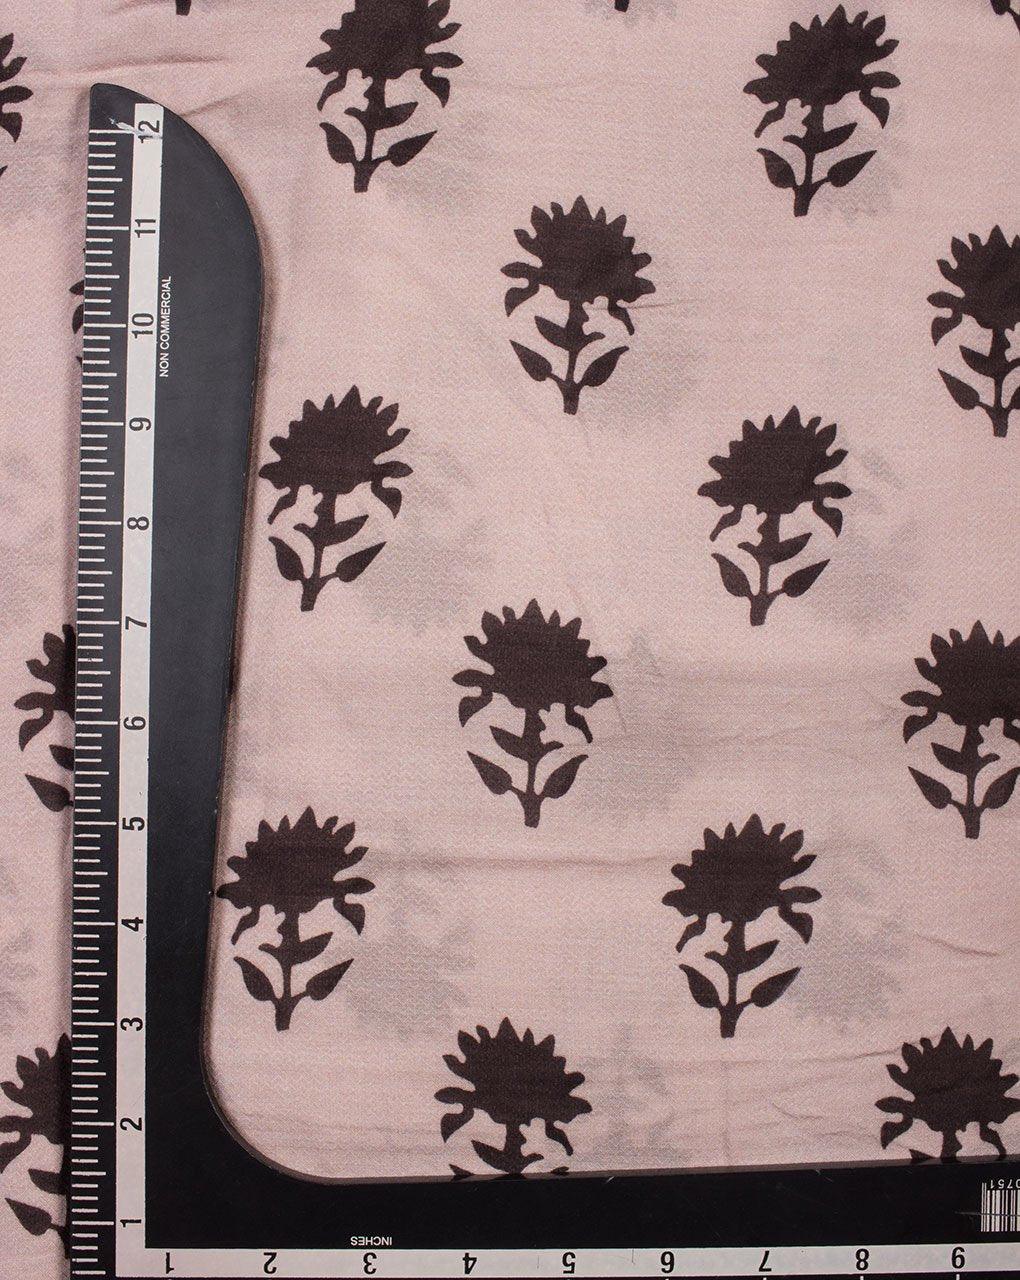 ( Pre-Cut 1.5 MTR ) Mauve Black Floral Pattern Digital Print Certified Banana Cotton Fabric - Fabriclore.com